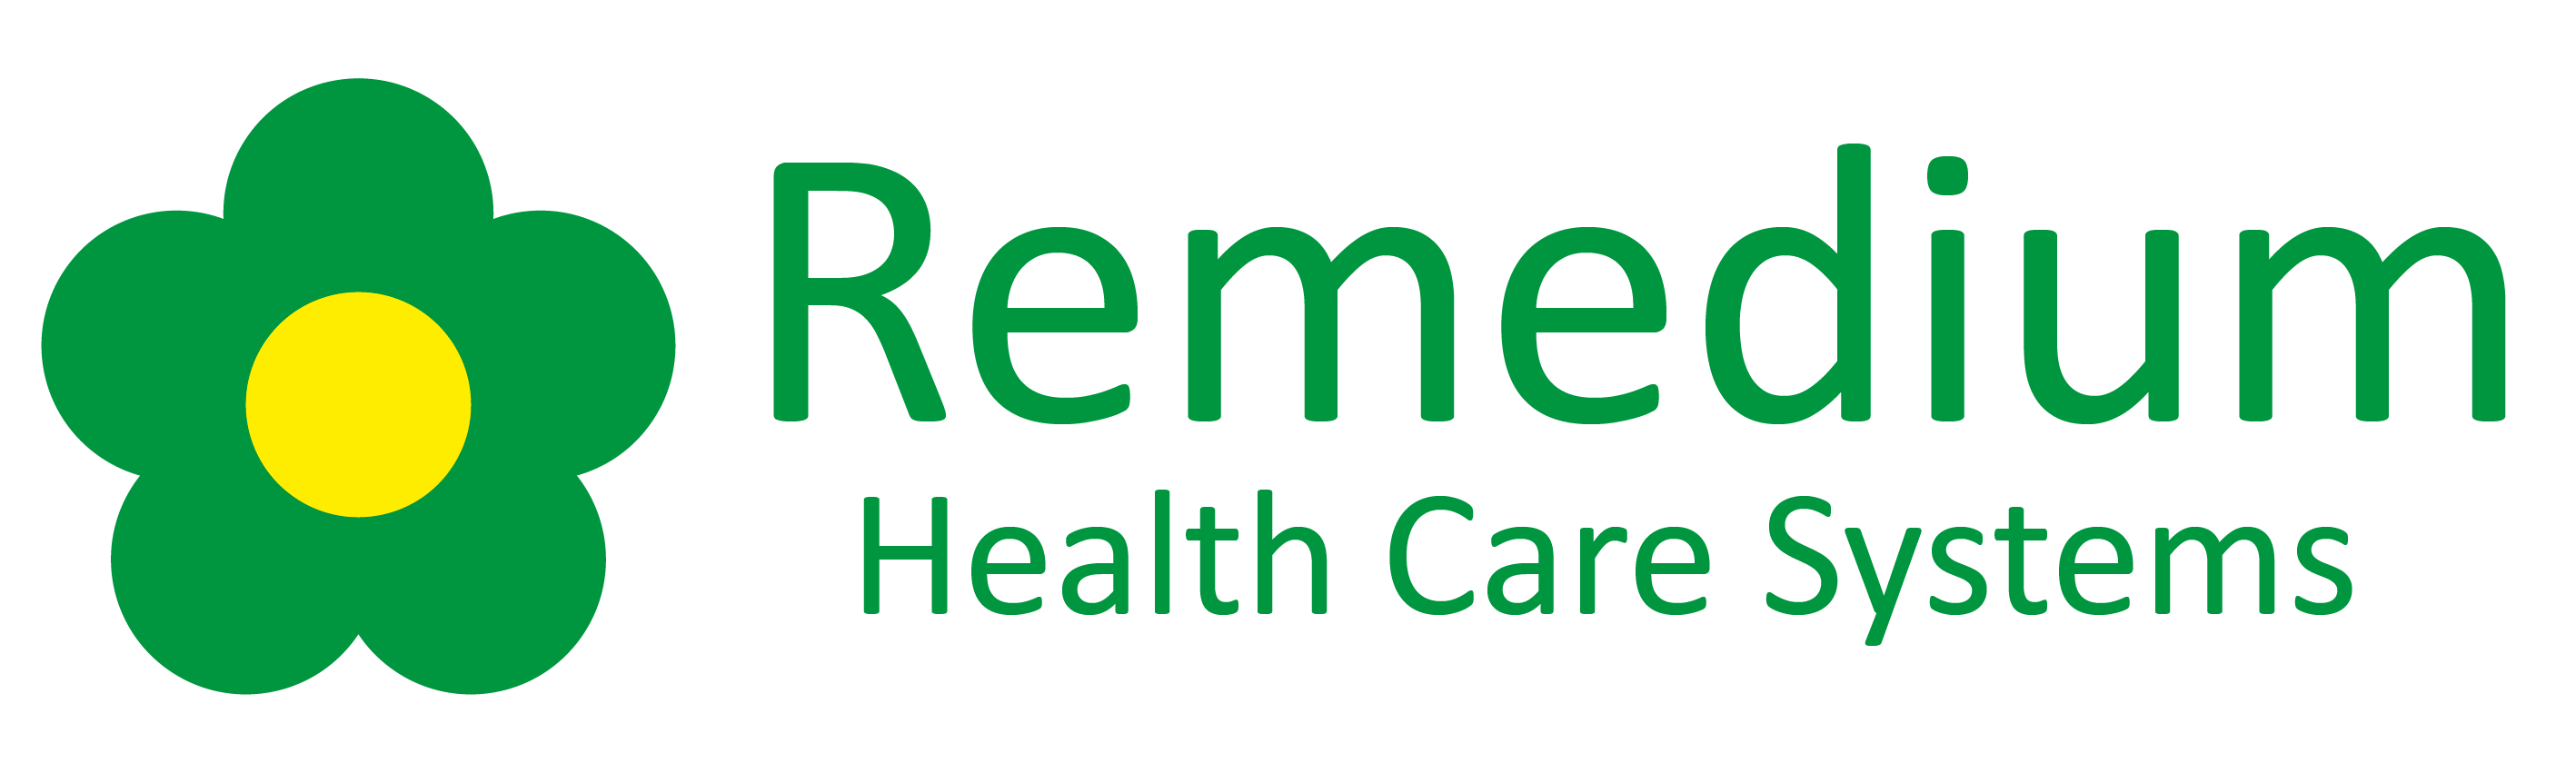 Remedium_Logo_Firm-skroutz_Horizontal.png